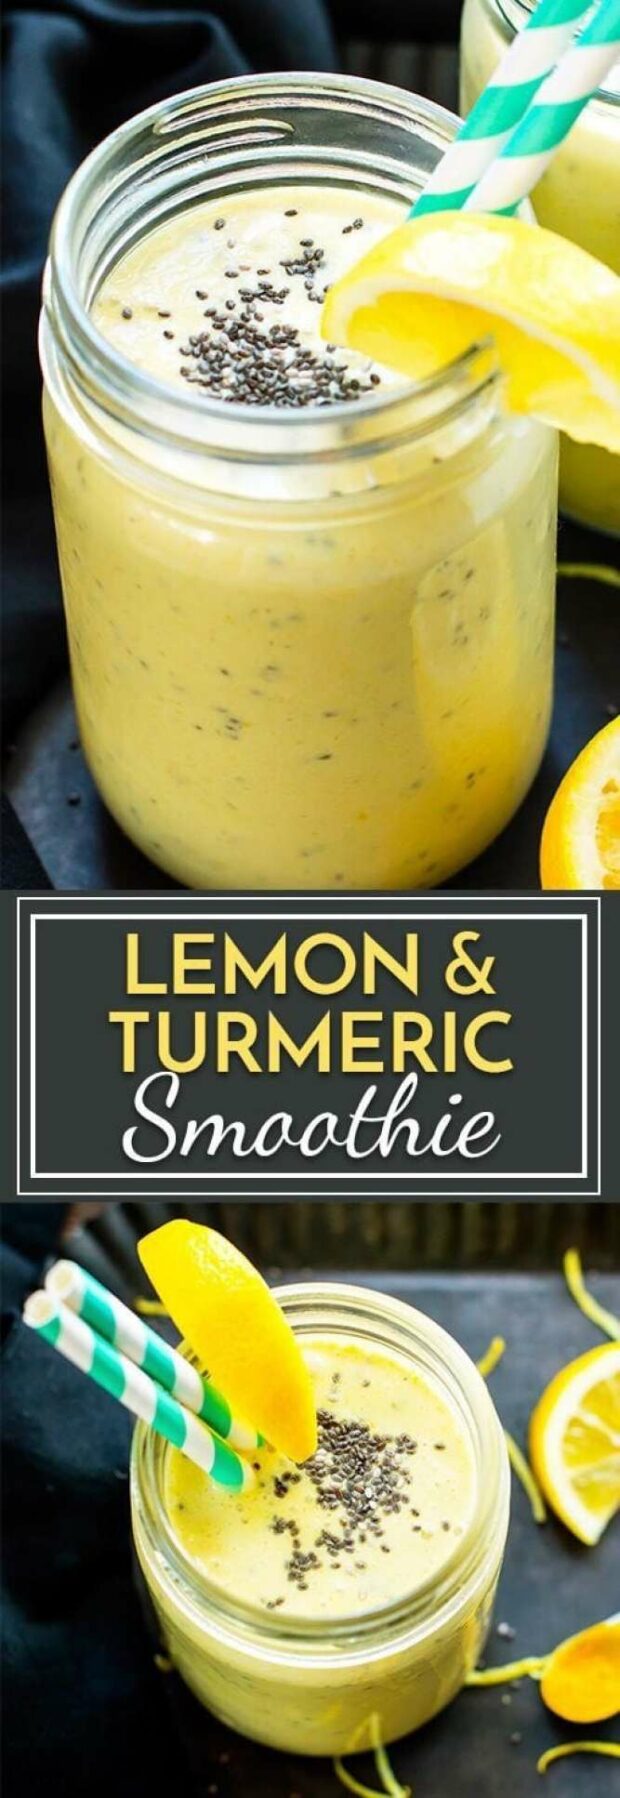 15 Healthy Turmeric Smoothie Recipes - Turmeric Smoothie Recipes, smoothie recipes, Healthy Smoothie Recipes